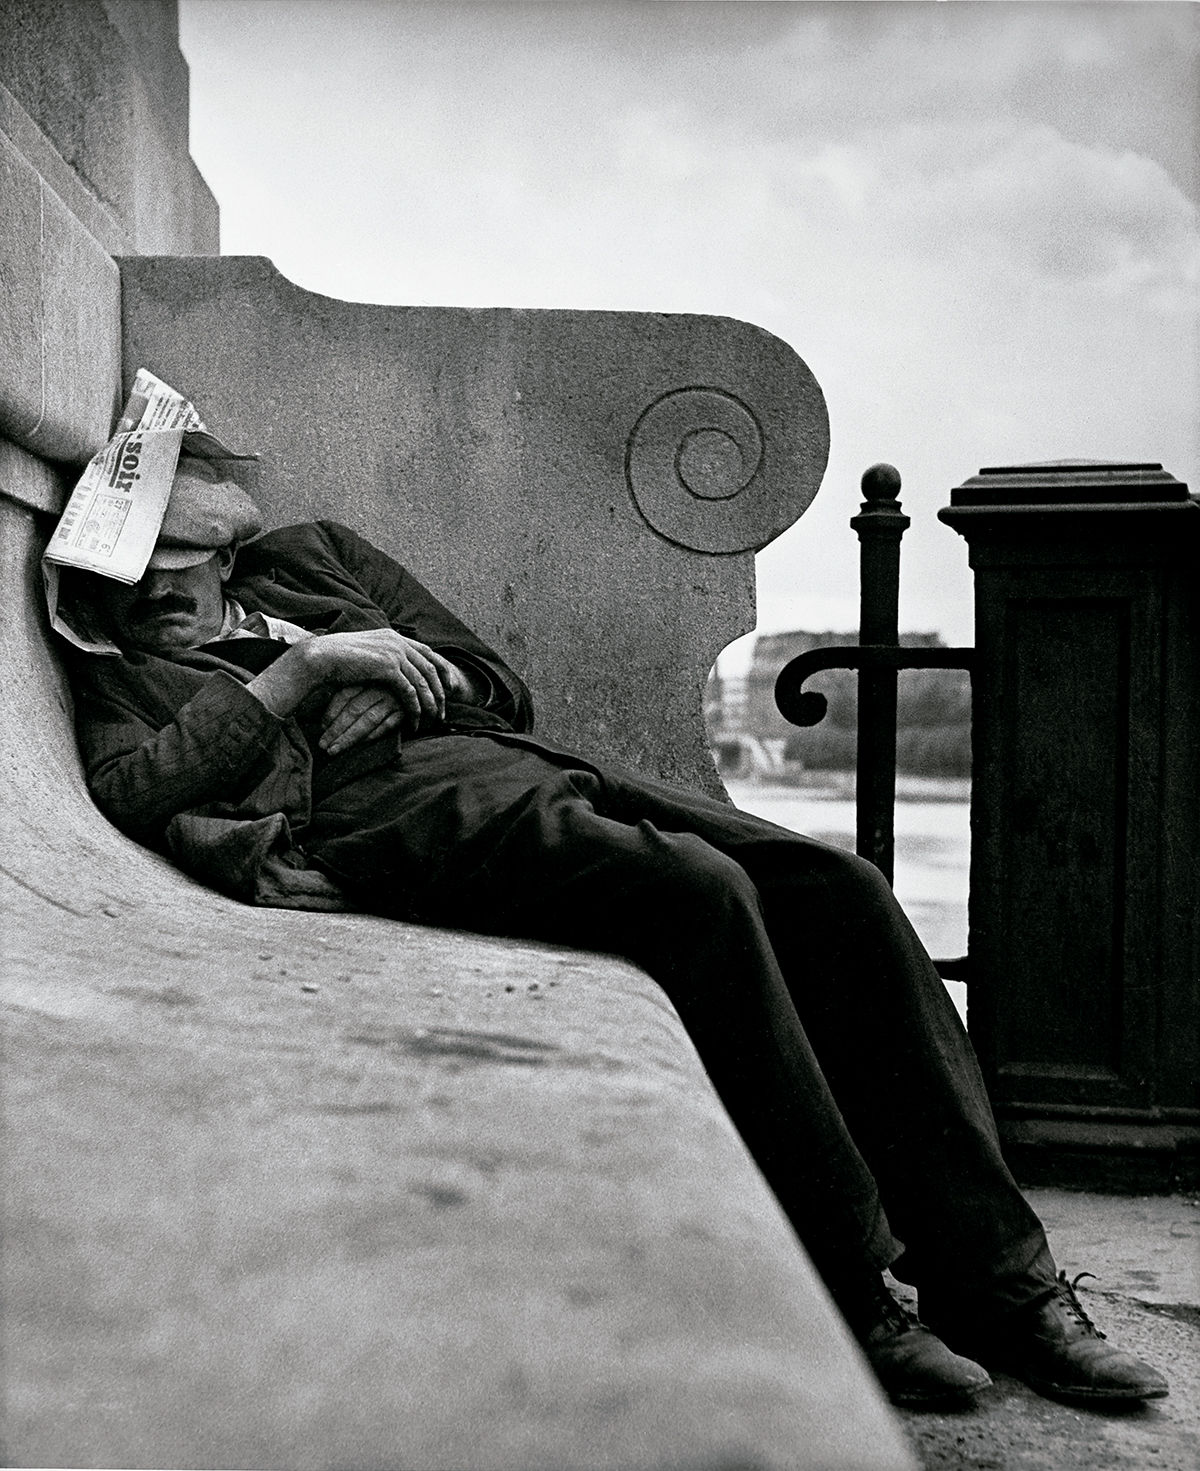 Sleeping by the Seine, Paris © The Lisette Model Foundation Inc. © COLECCIONES Fundación MAPFRE